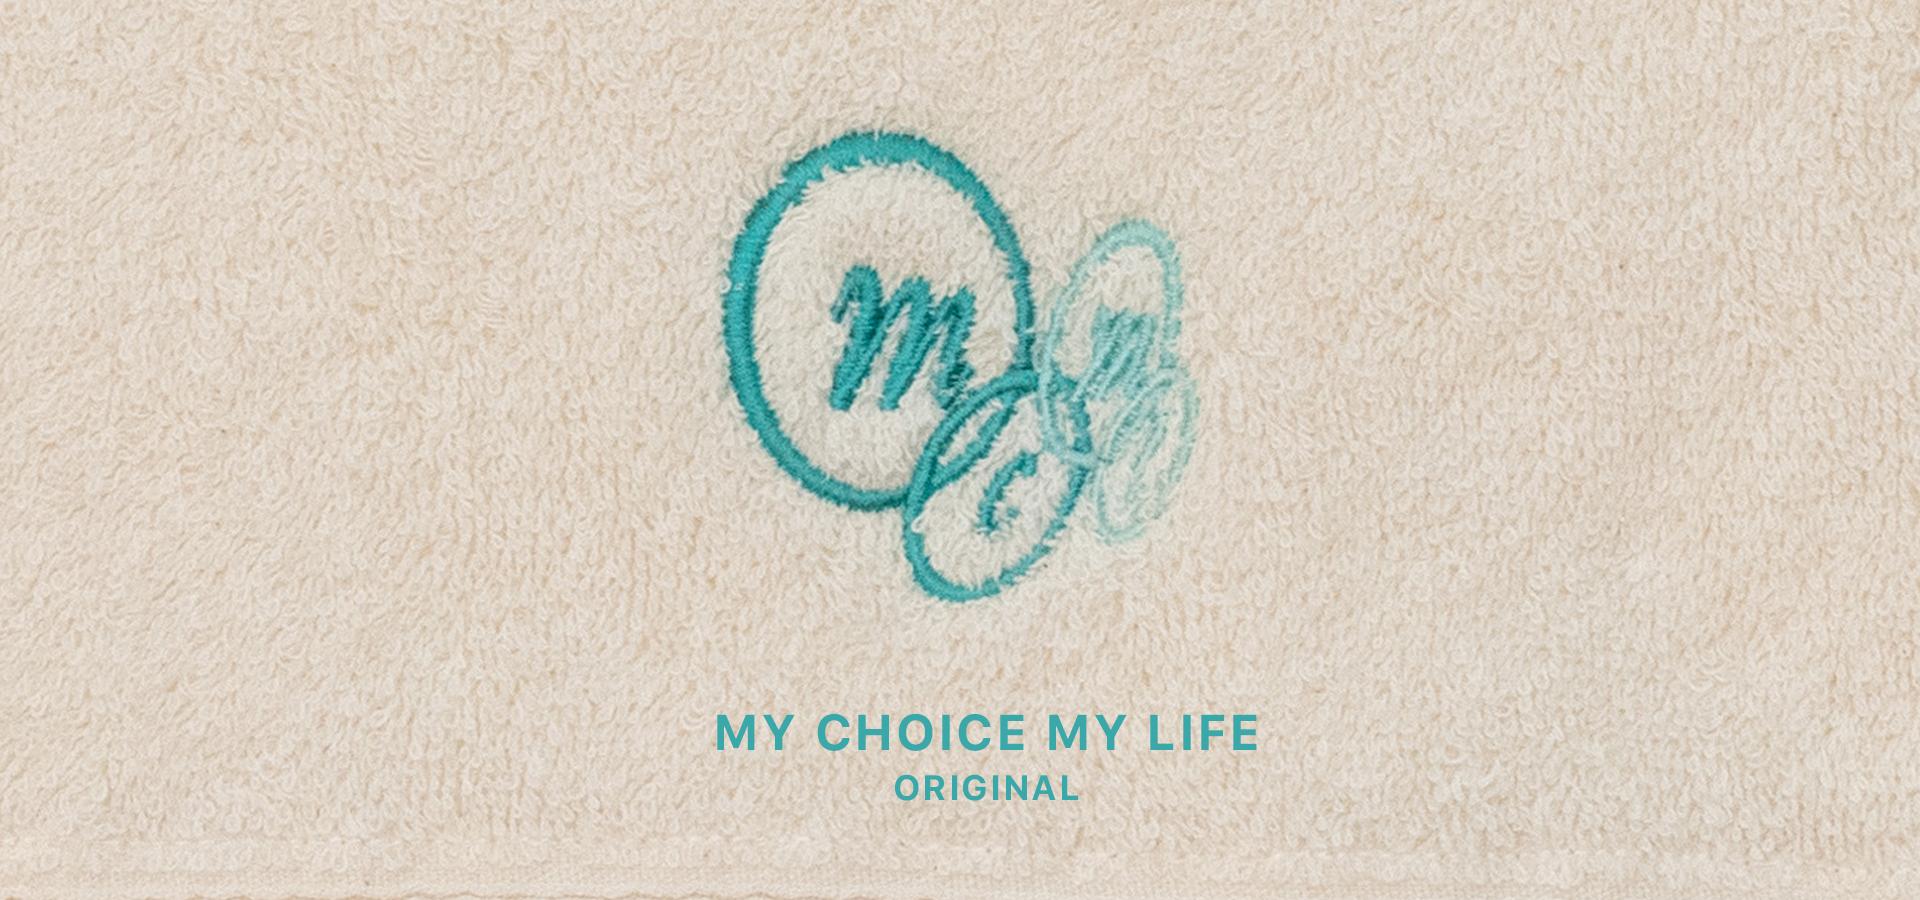 MCML-ORIGINAL-Banner